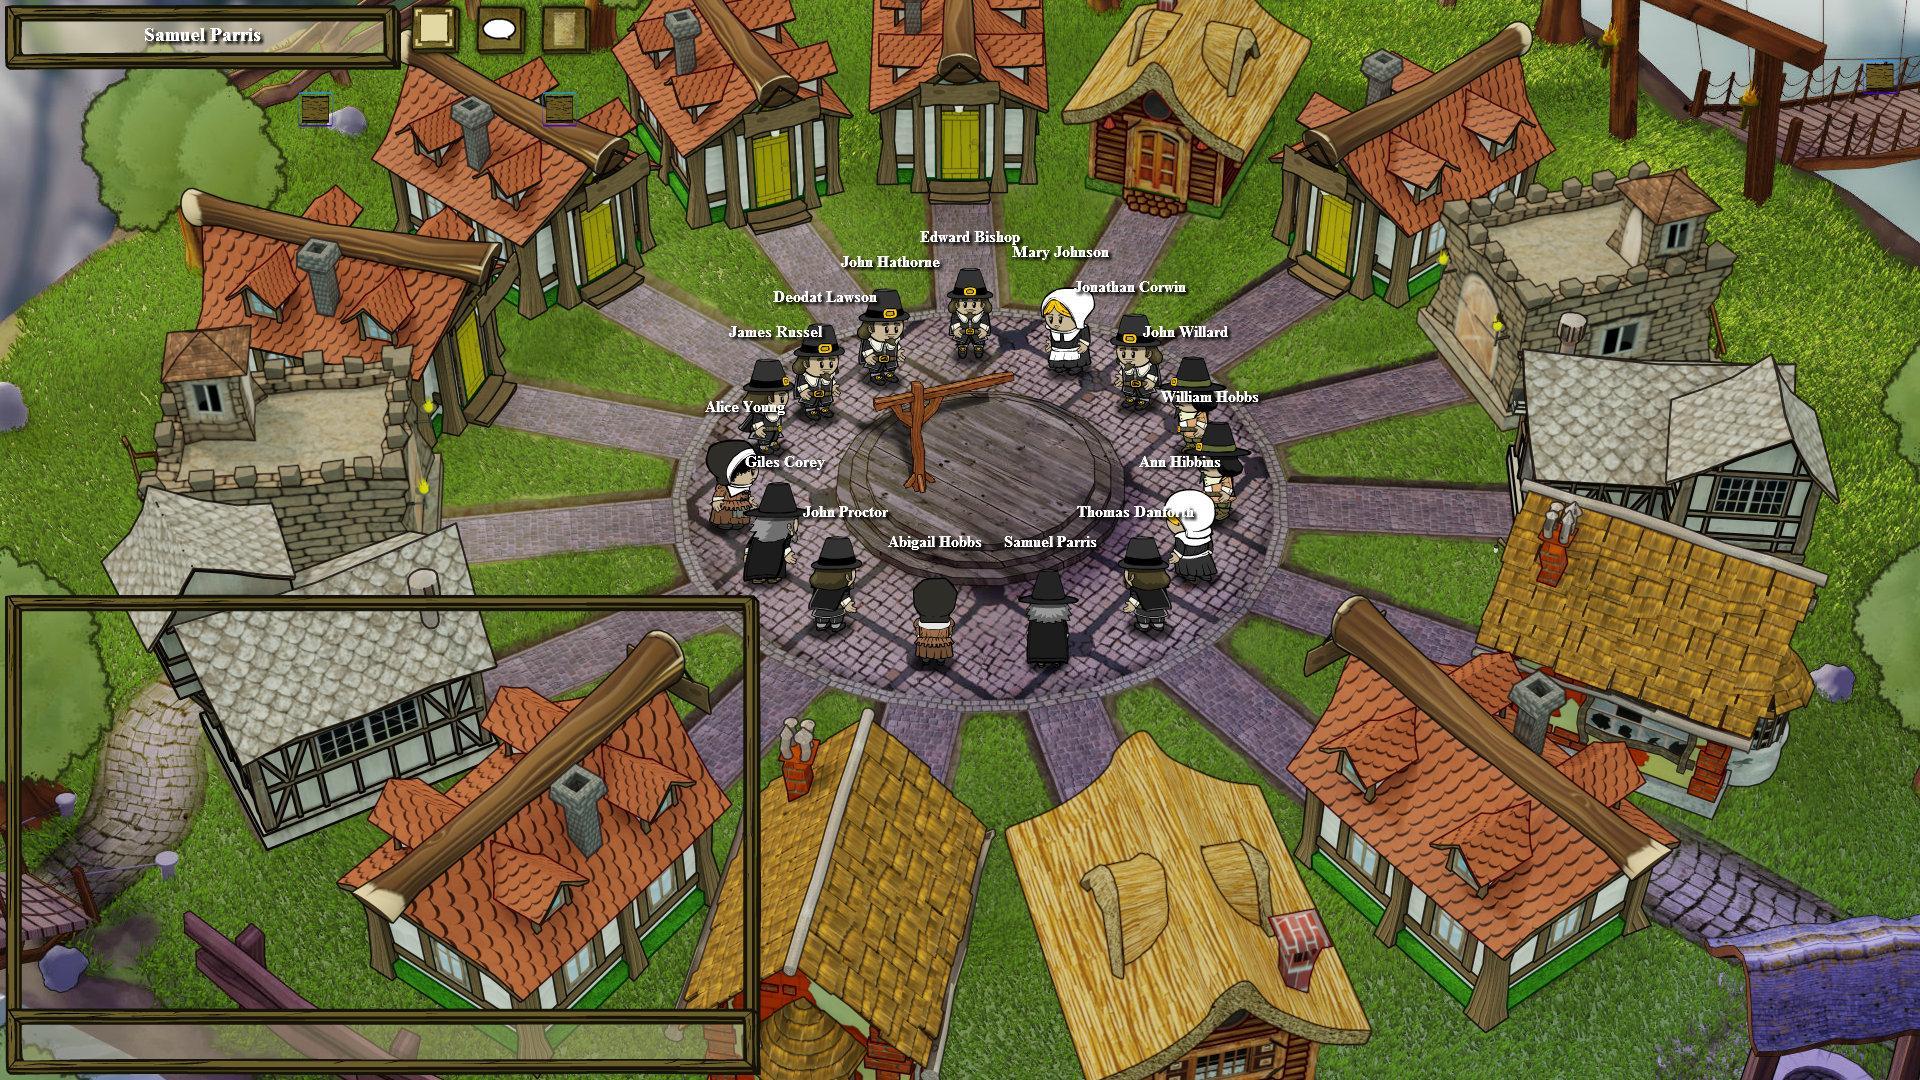 Screenshot 1 of セーラムの町 1.5.0